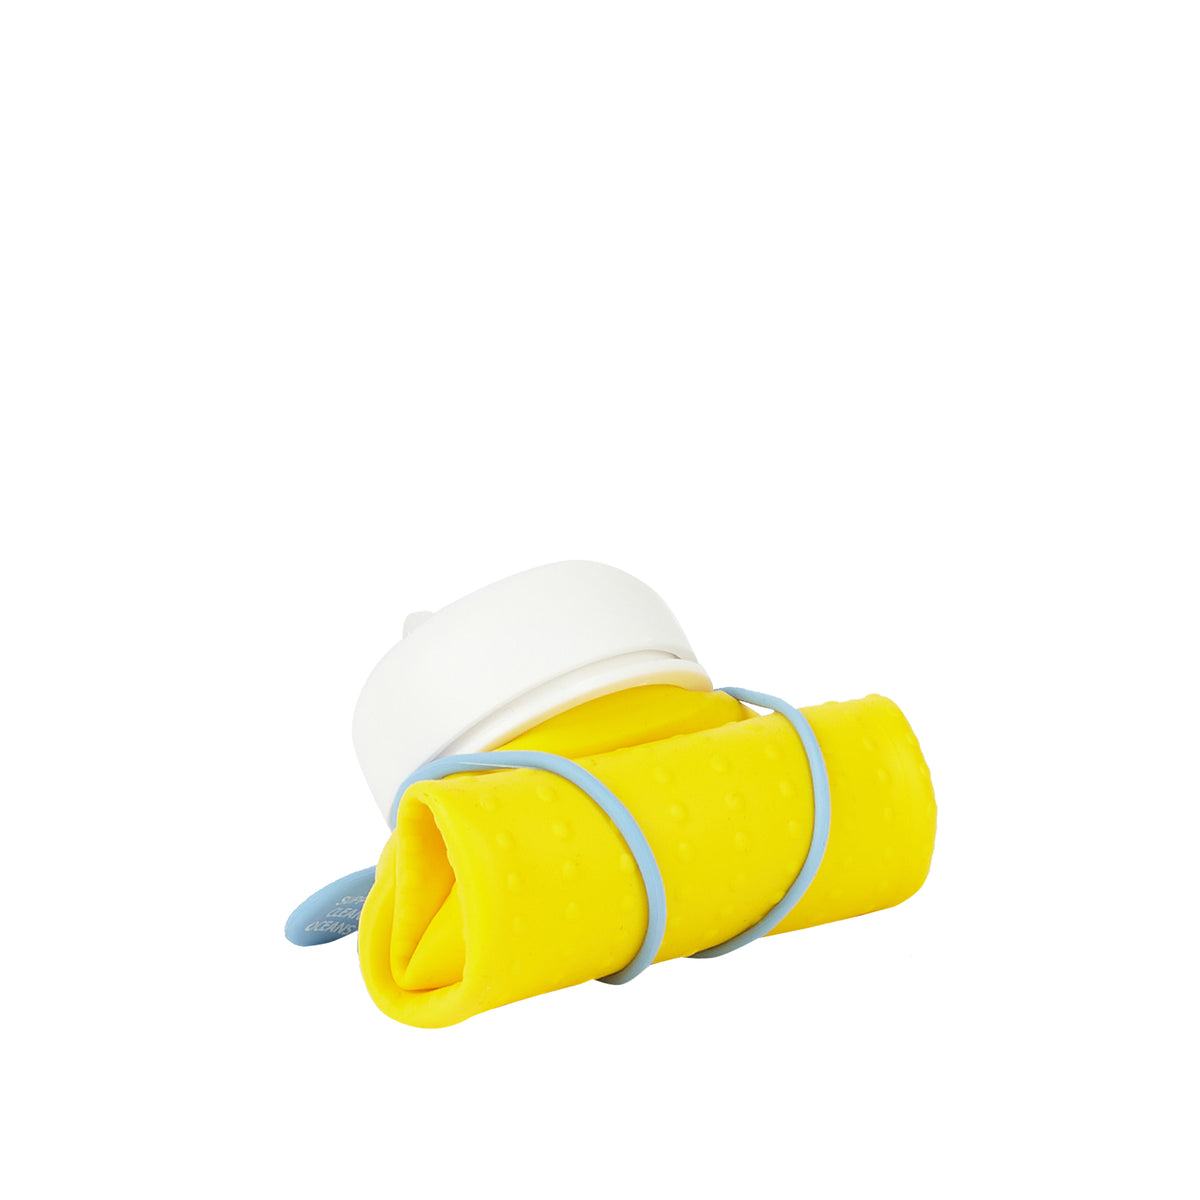 Rolla Bottle - Yellow, White Lid + Dusty Blue Strap - rolled